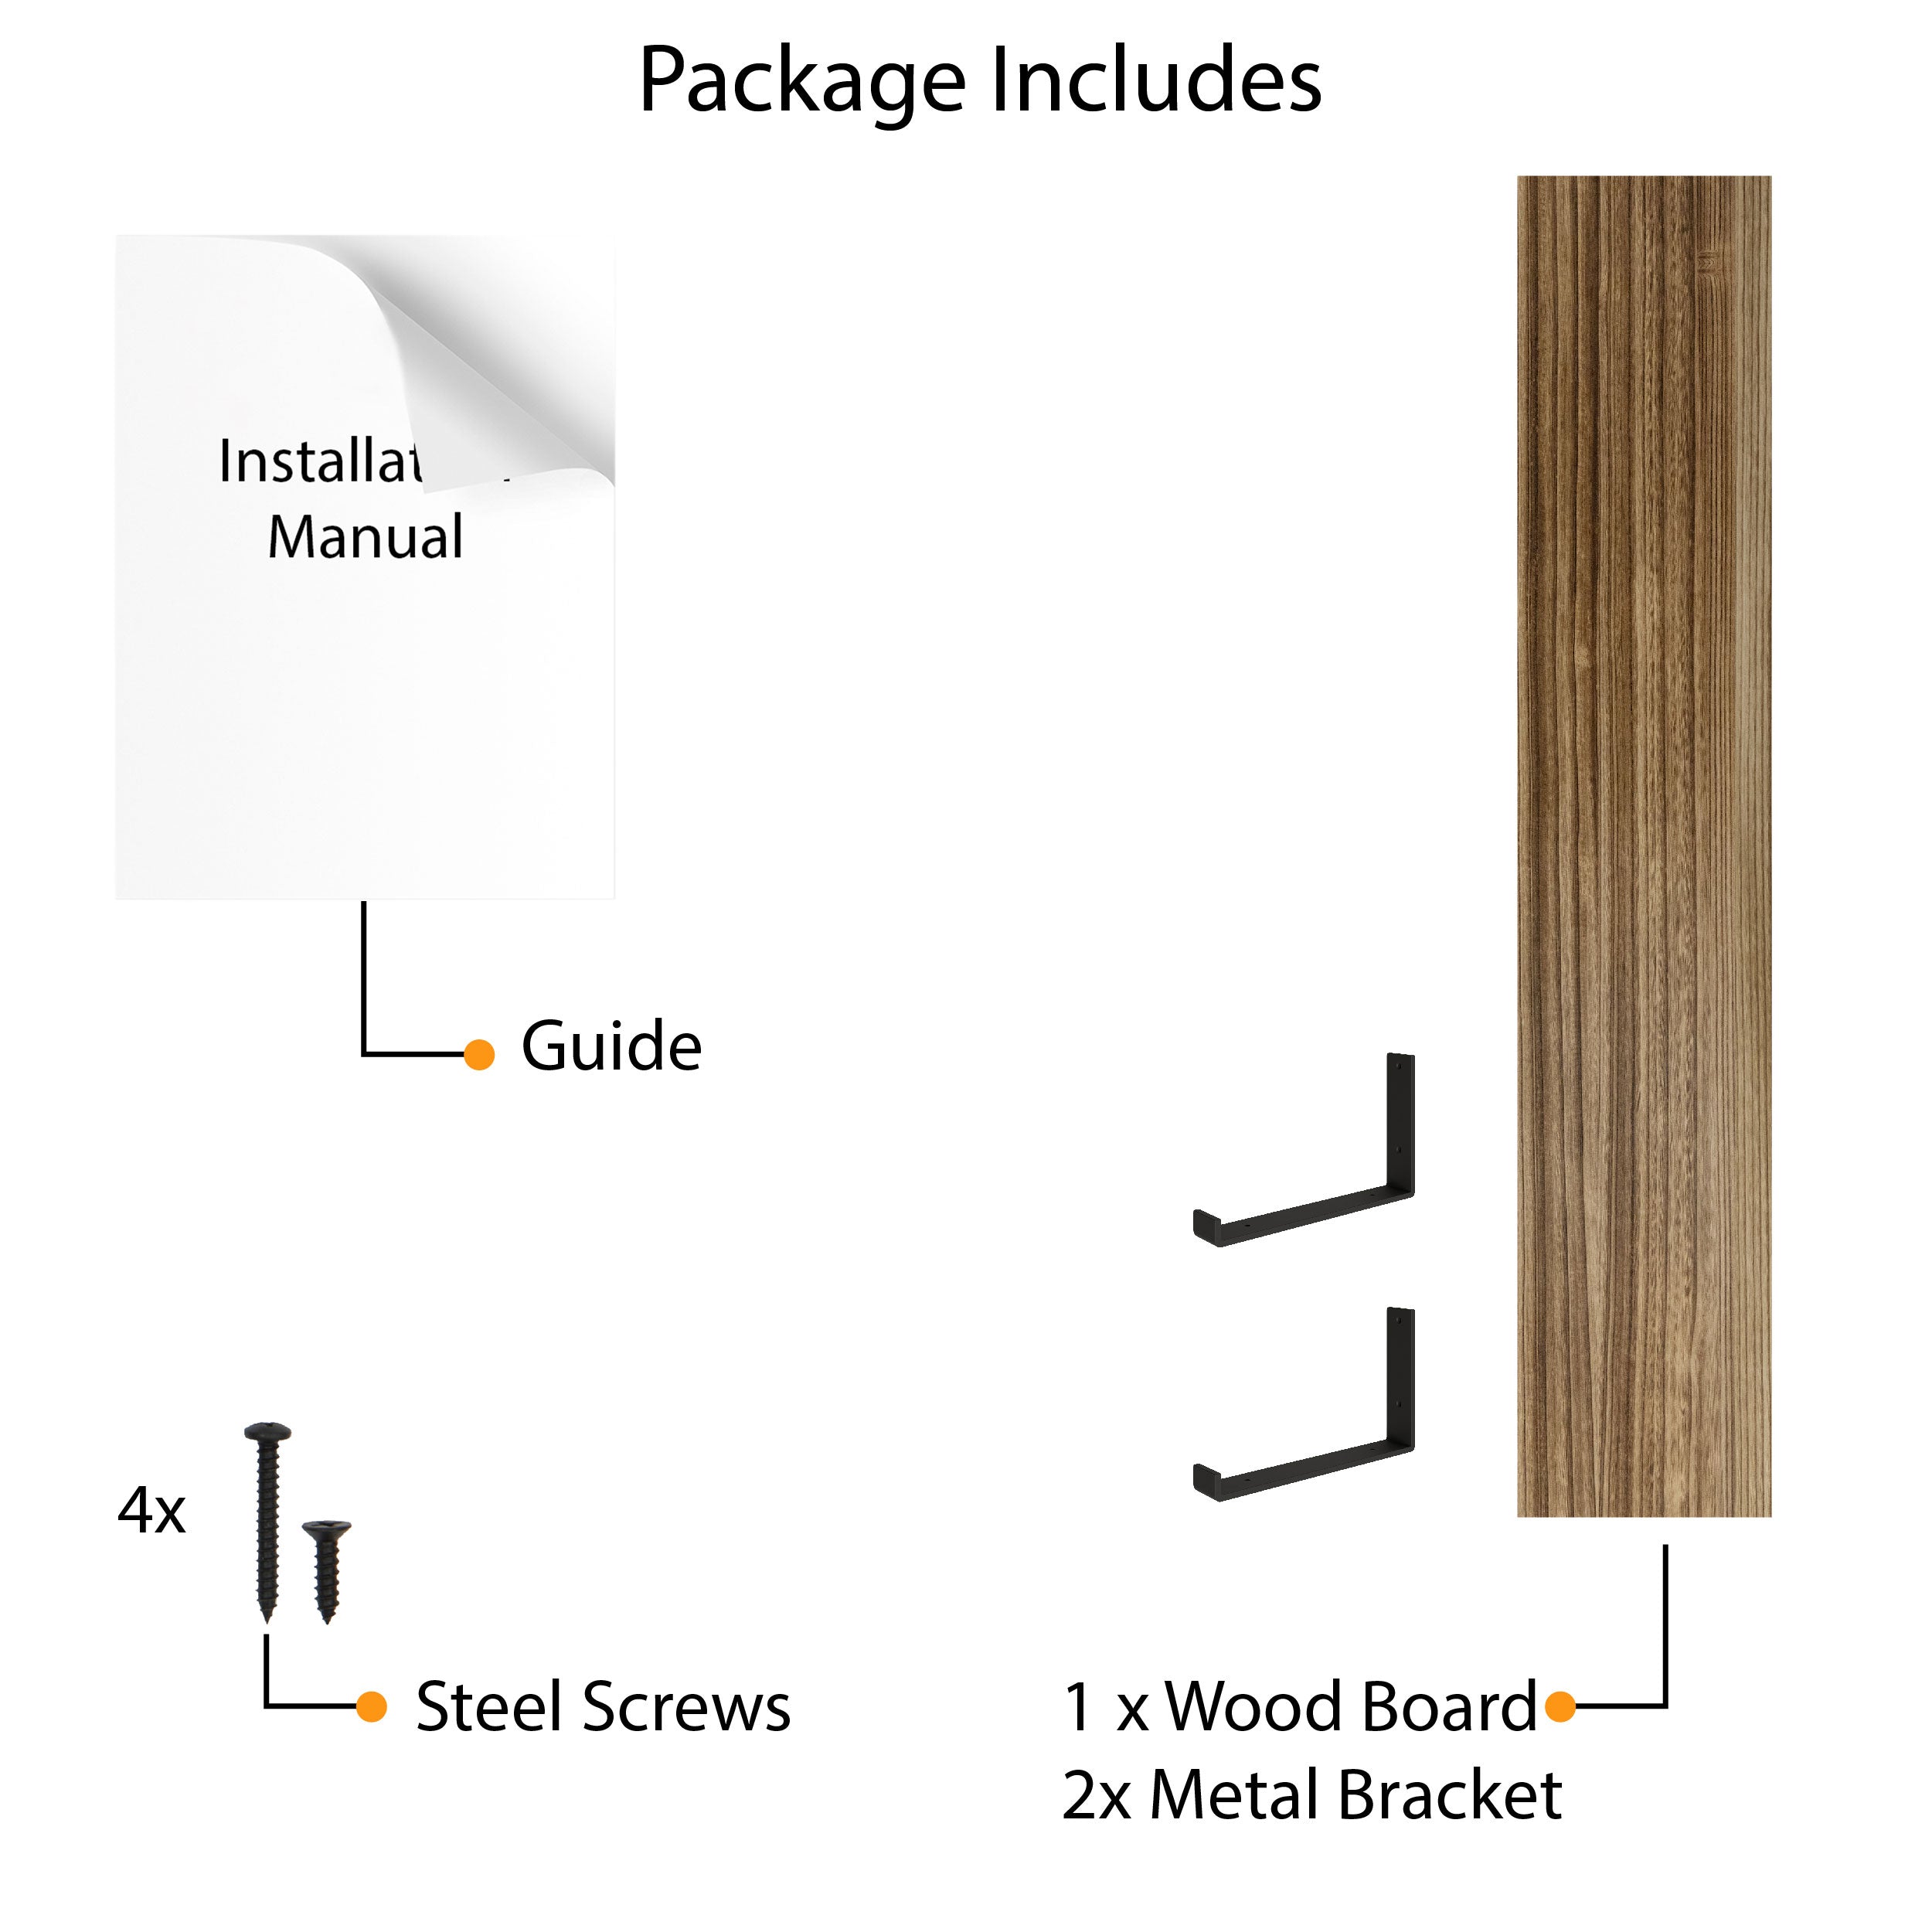 Shelf installation contents: wood board, brackets, screws